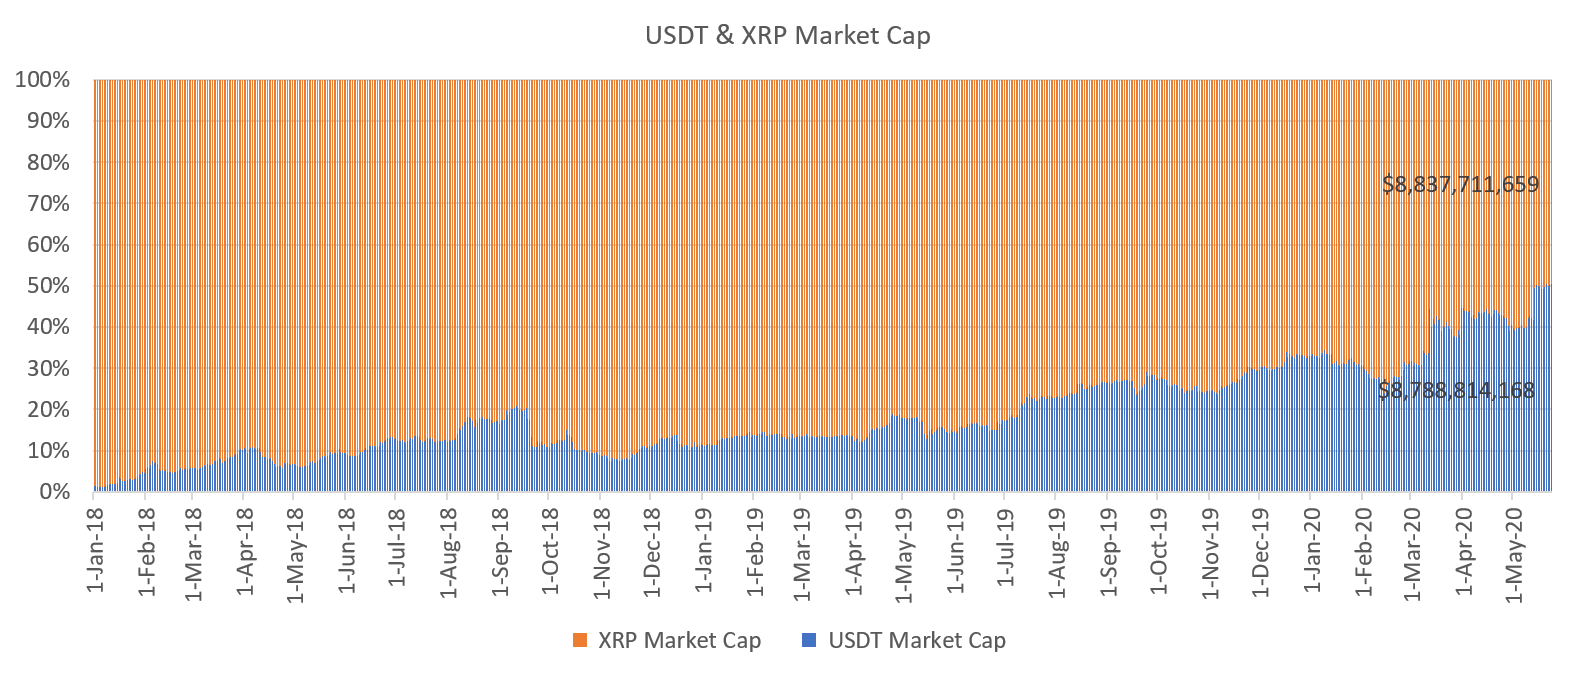 USDT vs. XRP market capitalization. Source: Cointelegraph, CoinMarketCap